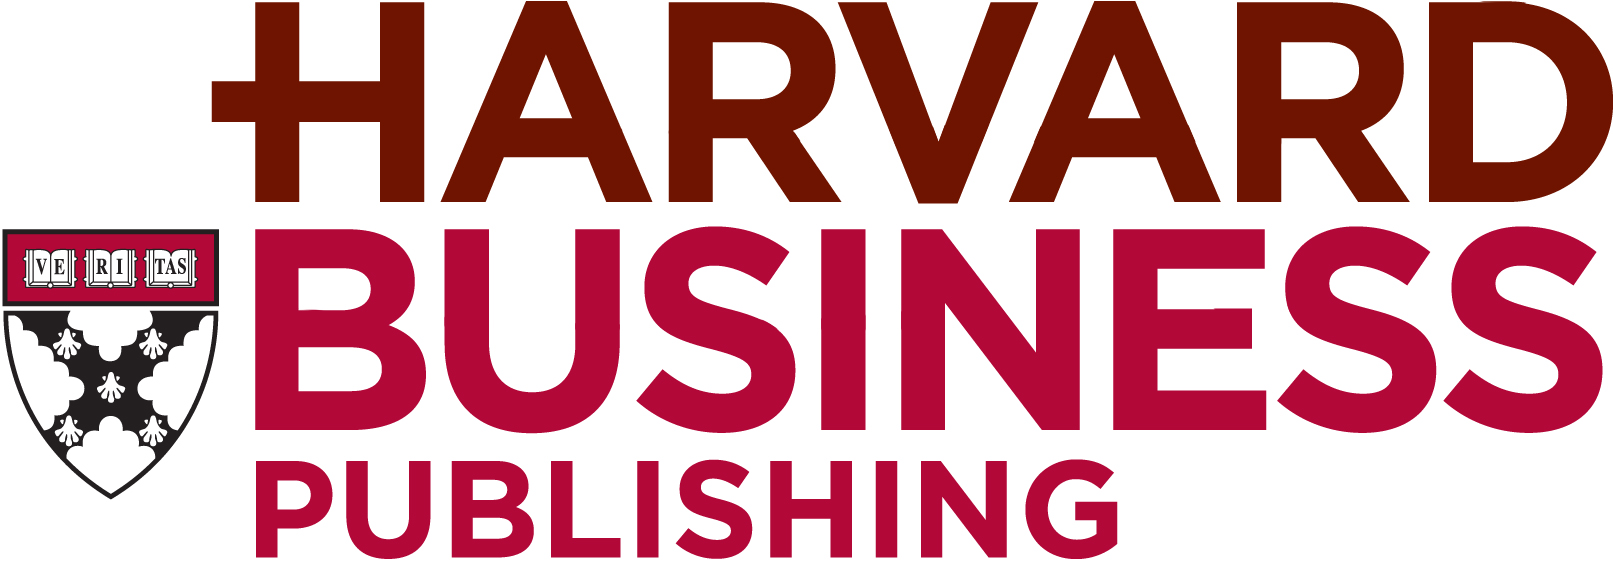 Harvard Business Press Logo